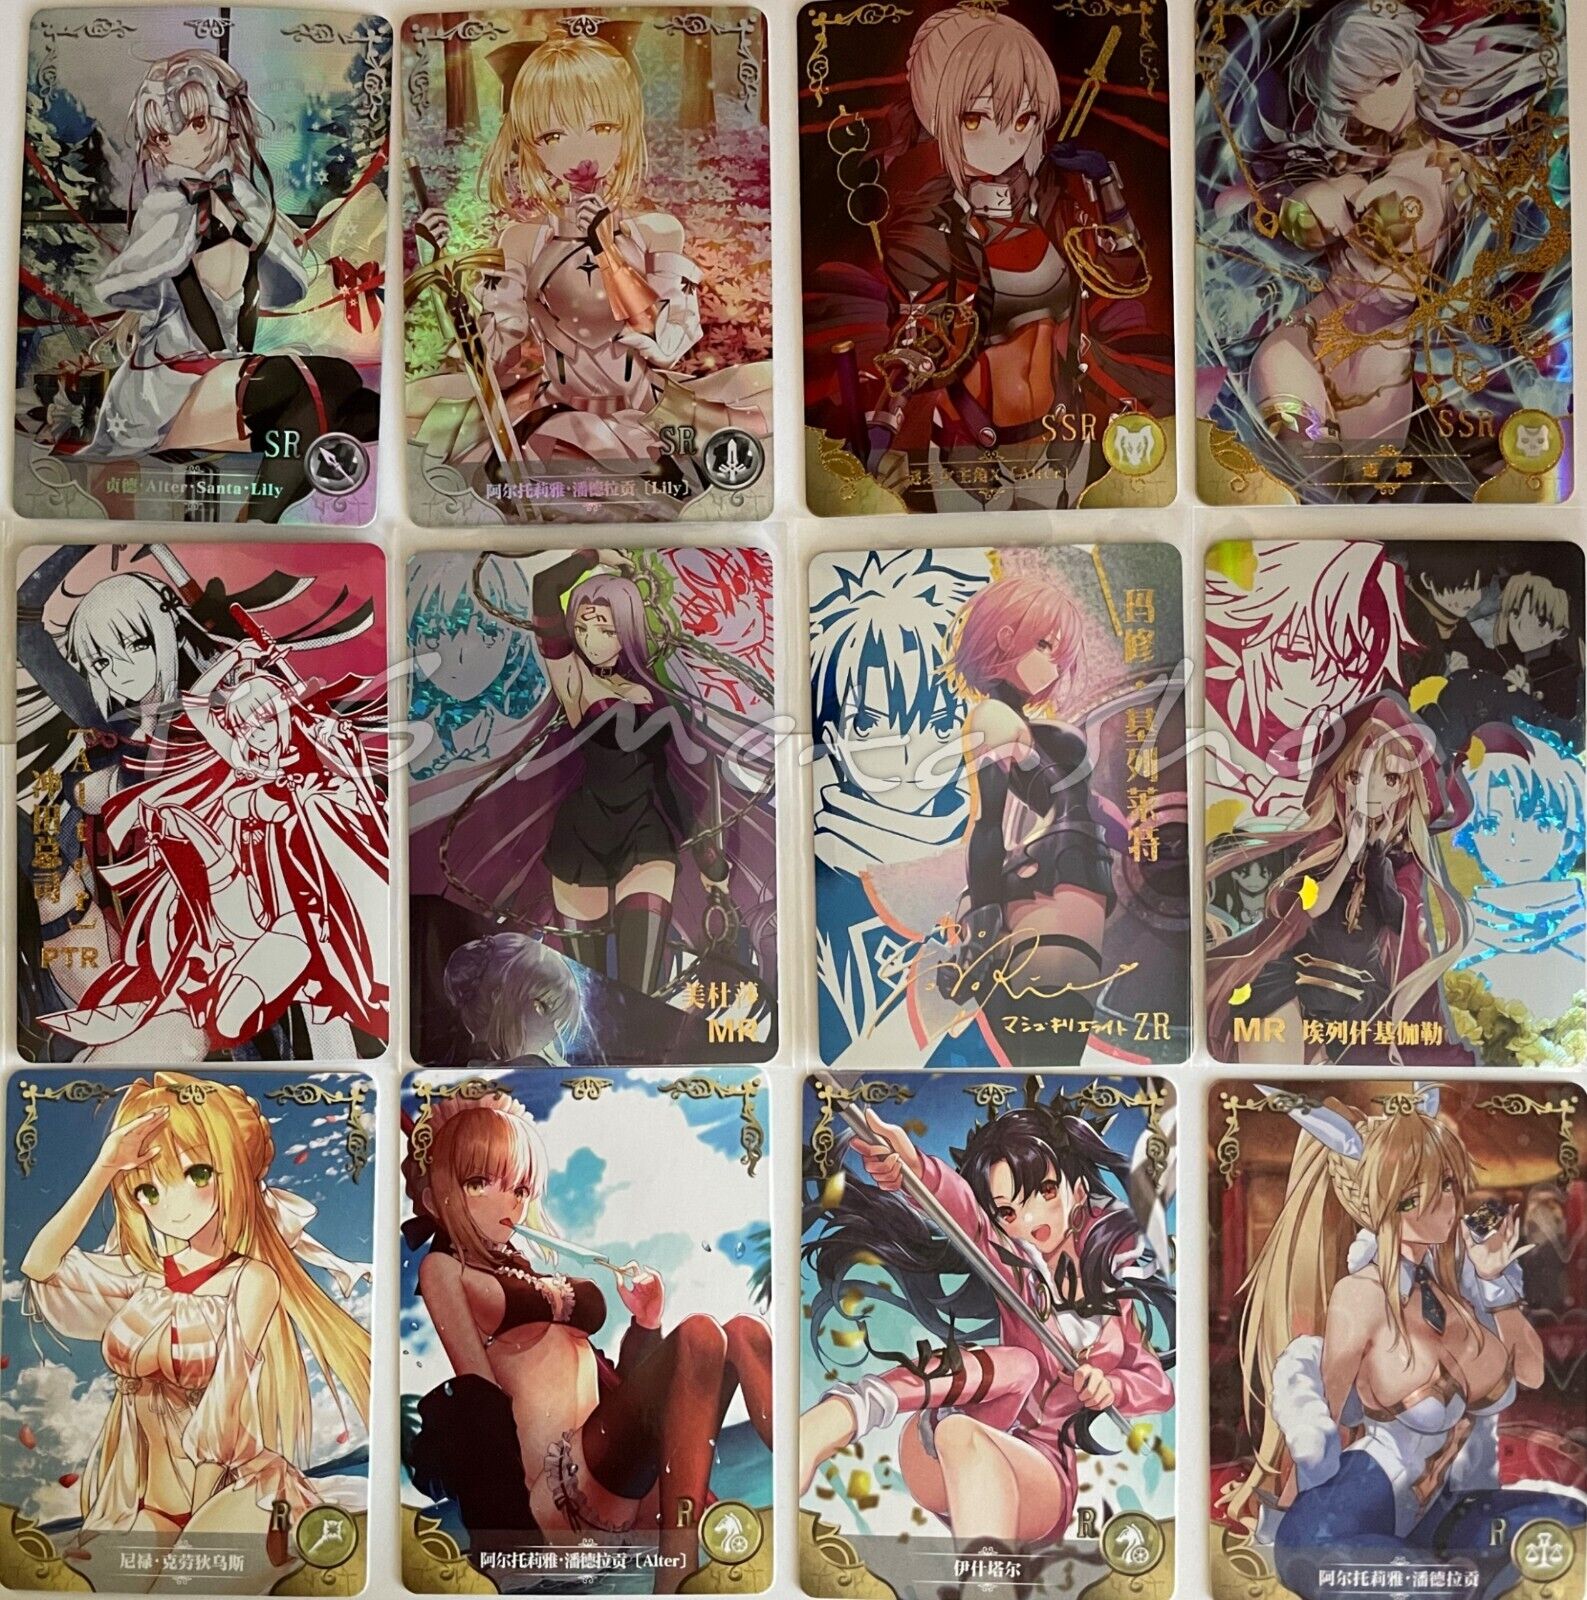 🔥 Goddess Story 5m04 Fate Set [Pick Your MR PTR ZR] Waifu Anime Doujin Cards 🔥